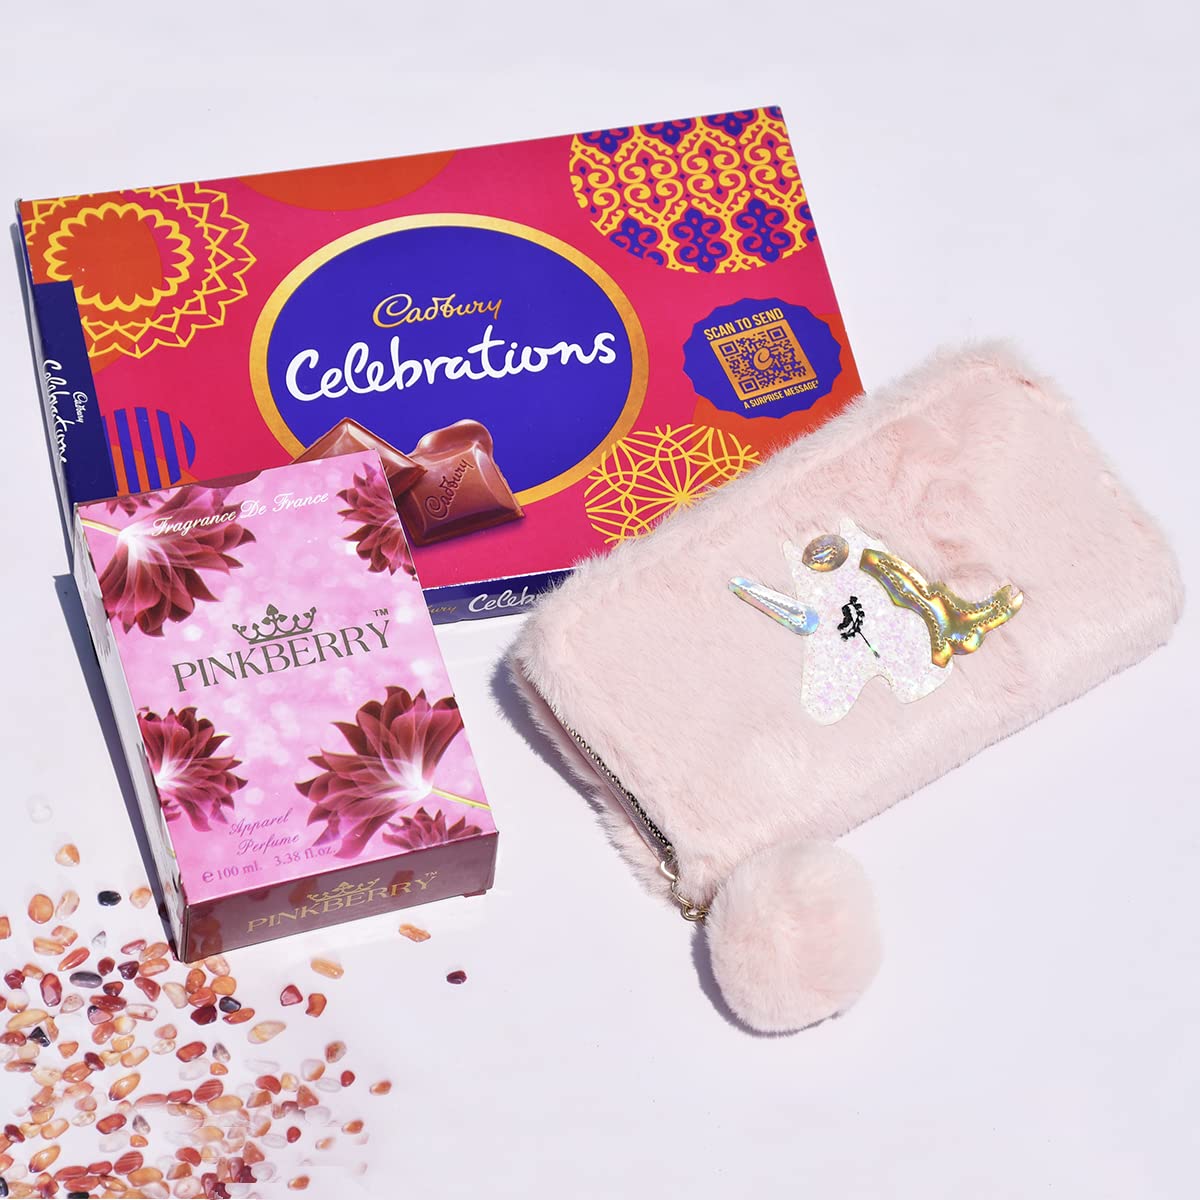 Perfume Gift Set | Dolce&Gabbana®